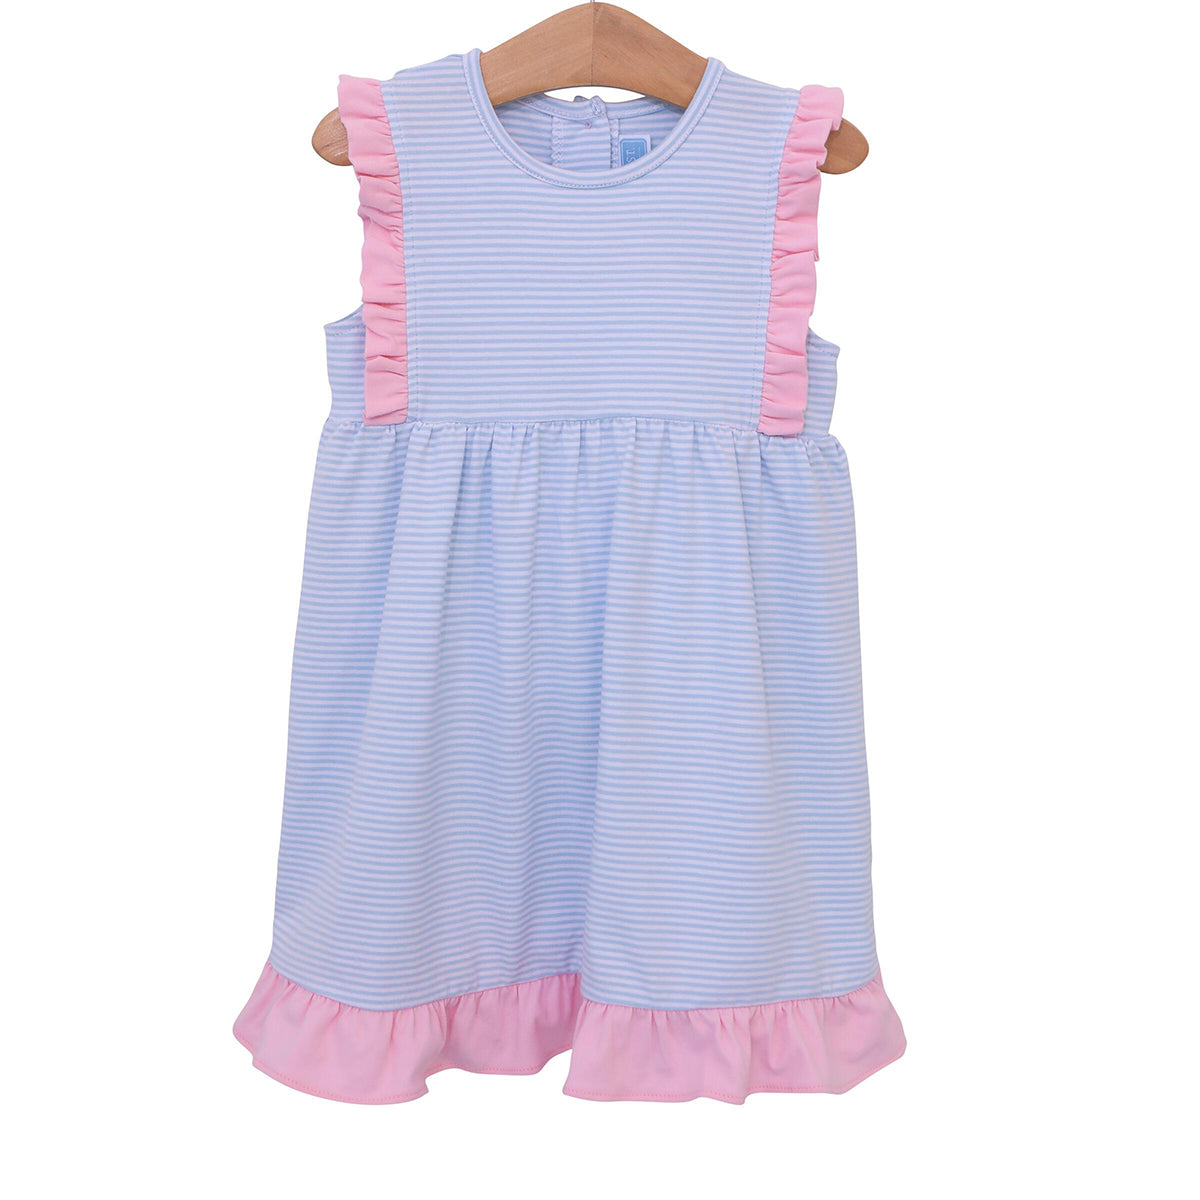 Light Blue Striped Josie Toddler Girl's Dress Trotter Street Kids